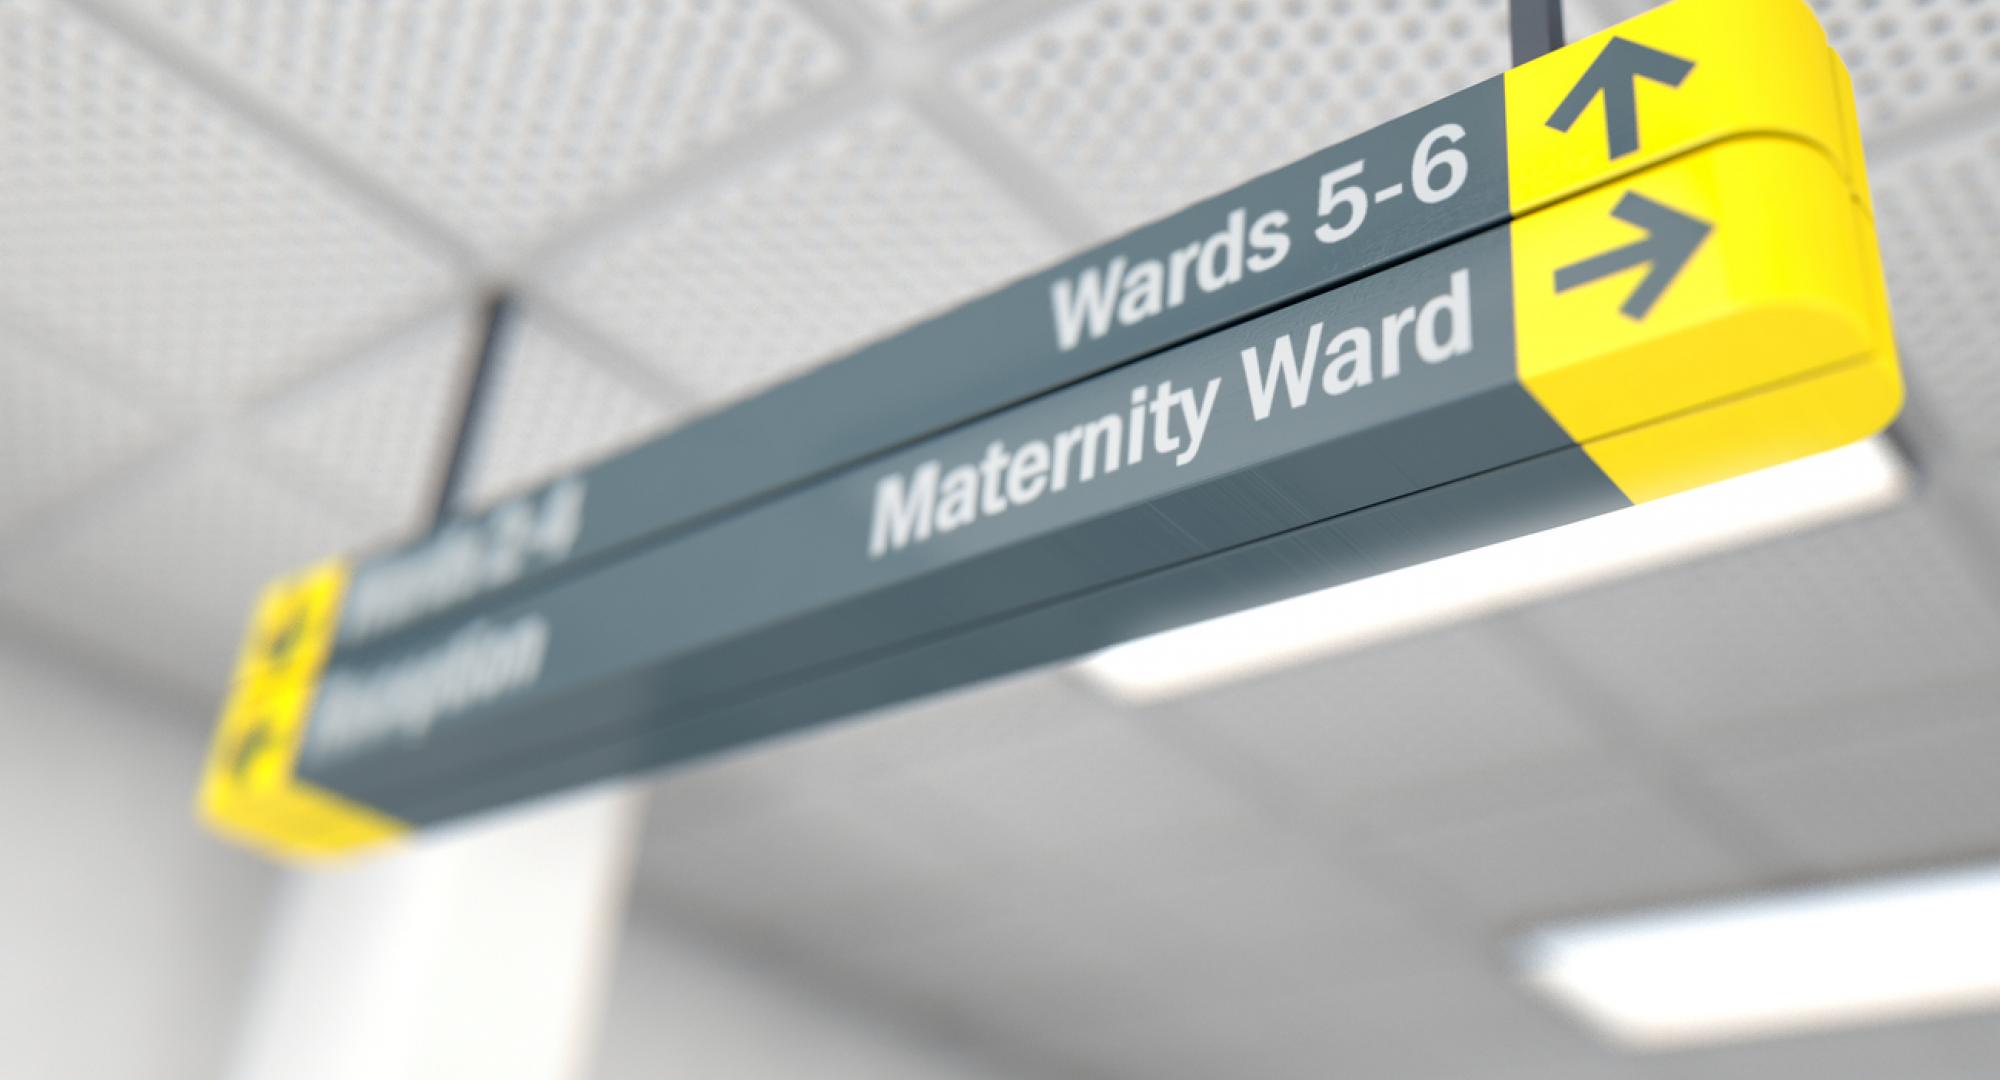 Maternity ward sign  